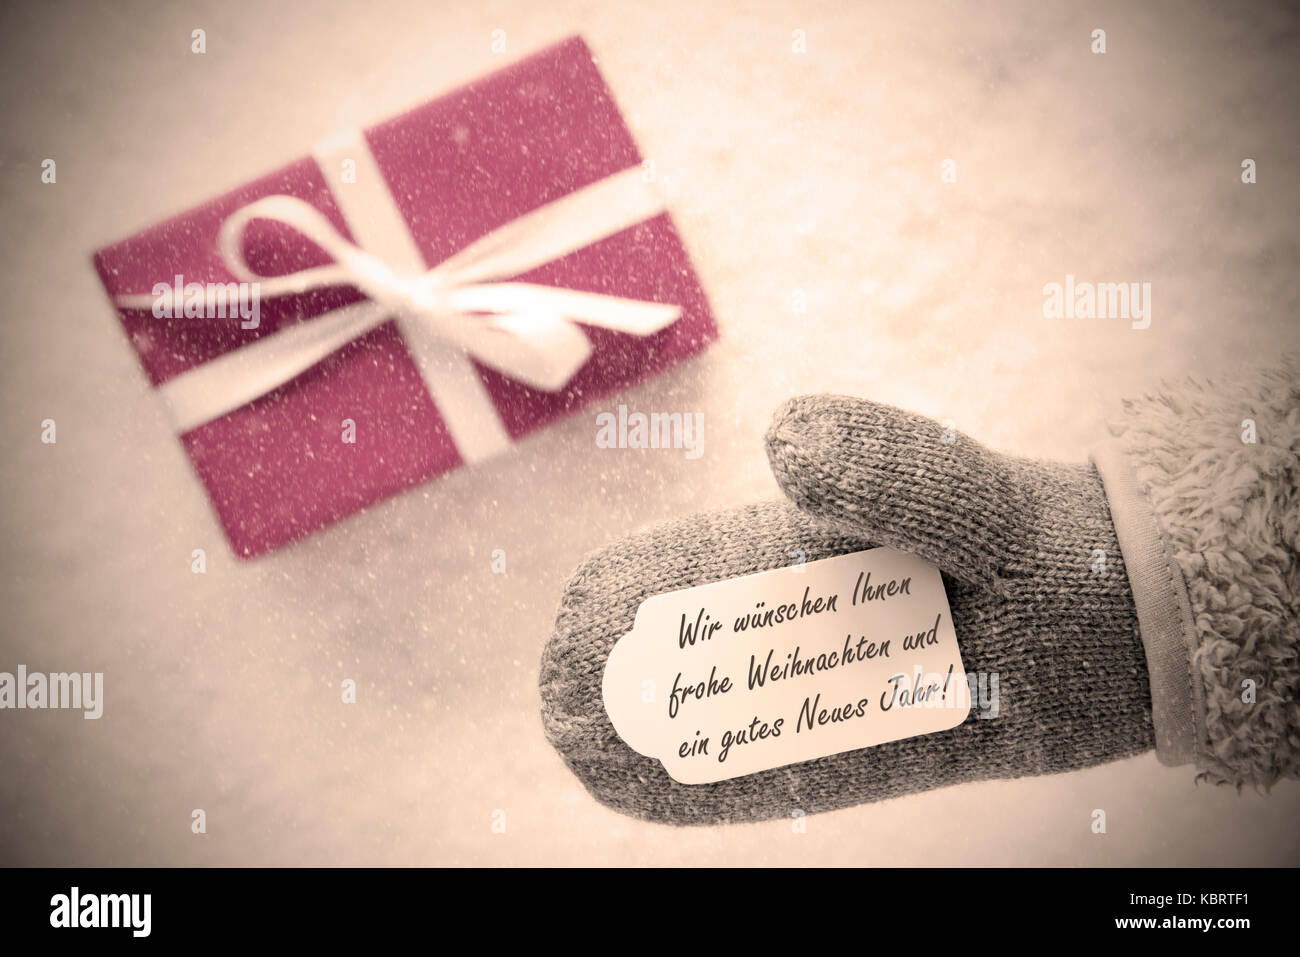 Pink Gift, Glove, Gutes Neues Jahr Means Happy New Year, Instagram Filter Stock Photo